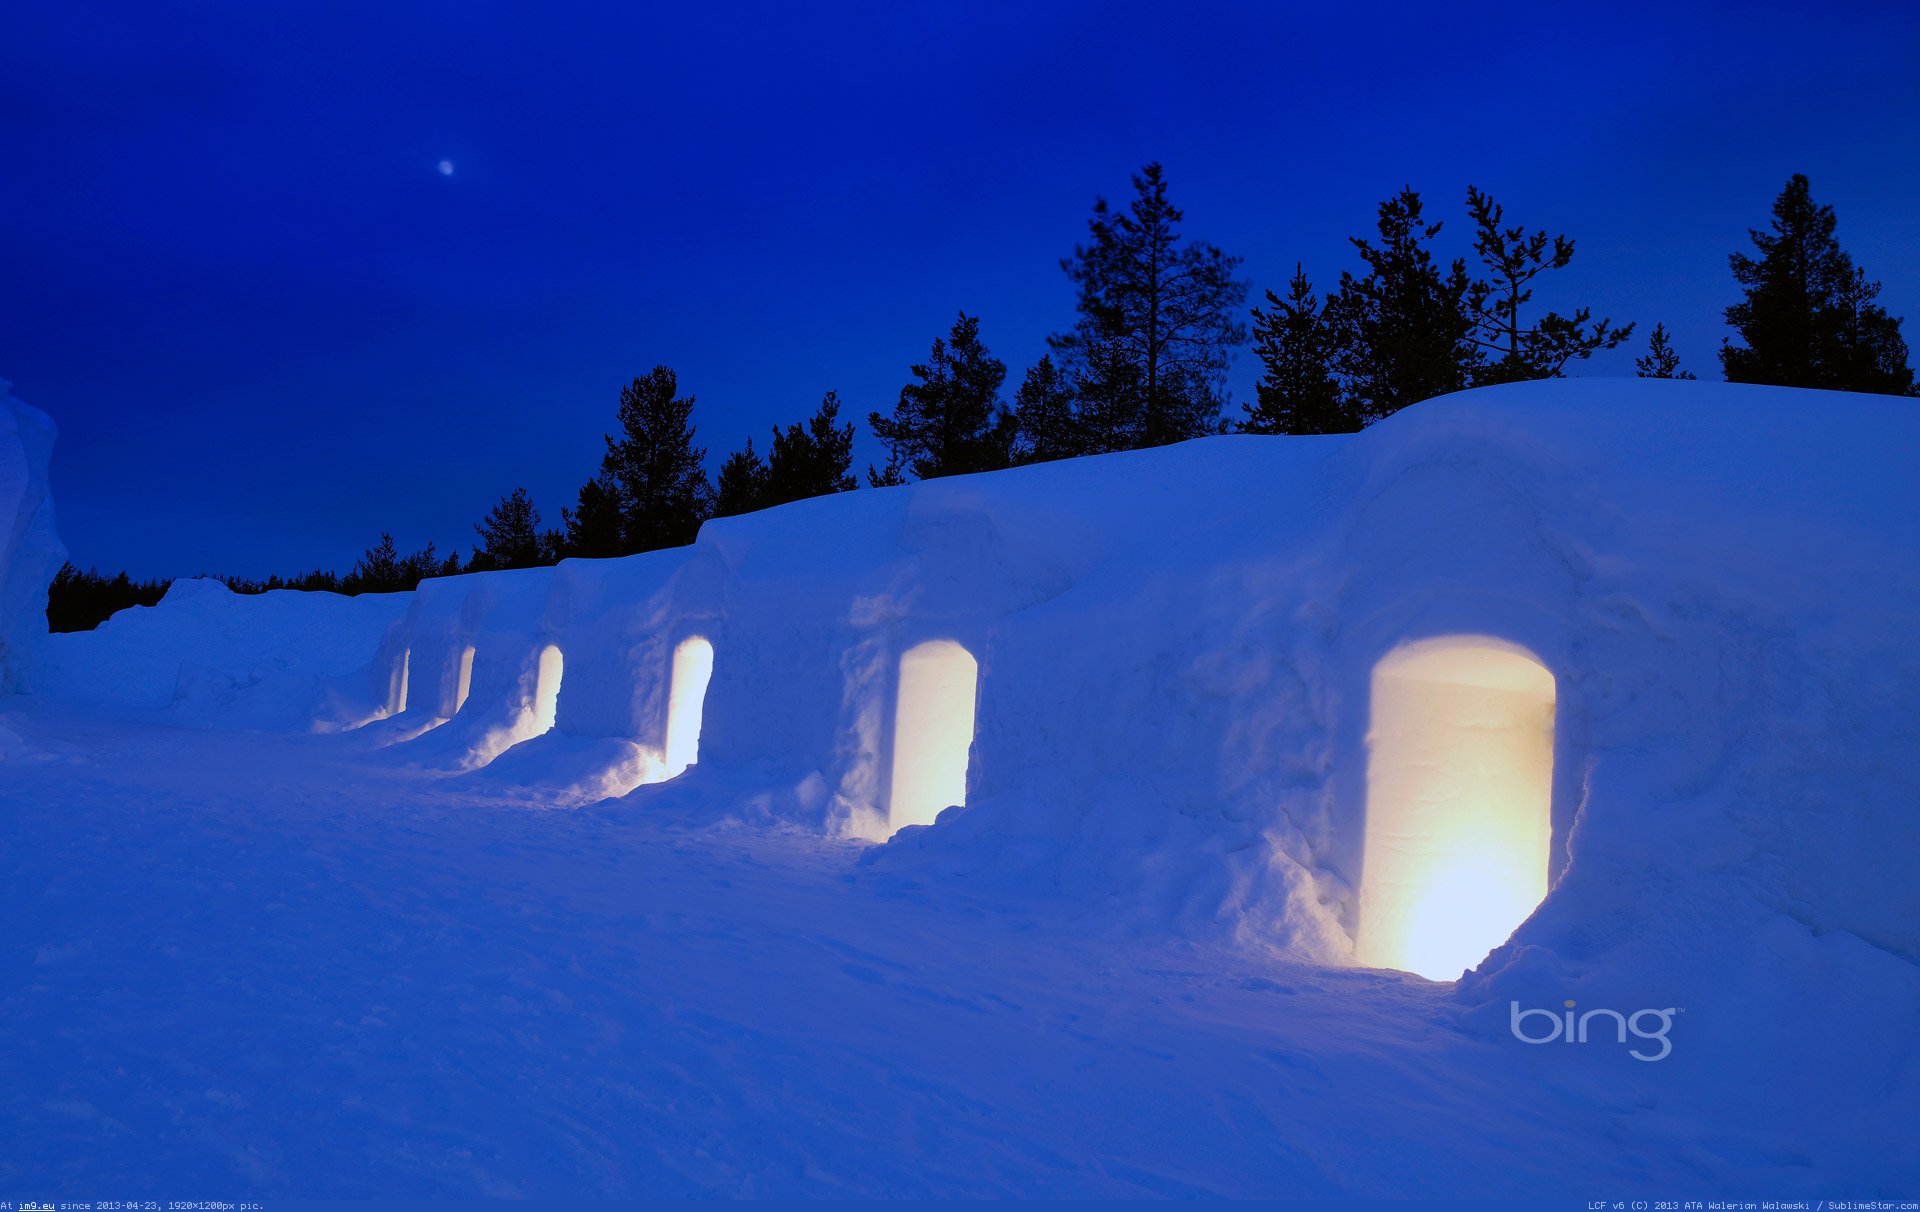 Иглу нн. Хижина иглу. Иглу жилище эскимосов. Какслауттанен Финляндия. Дом из снега.